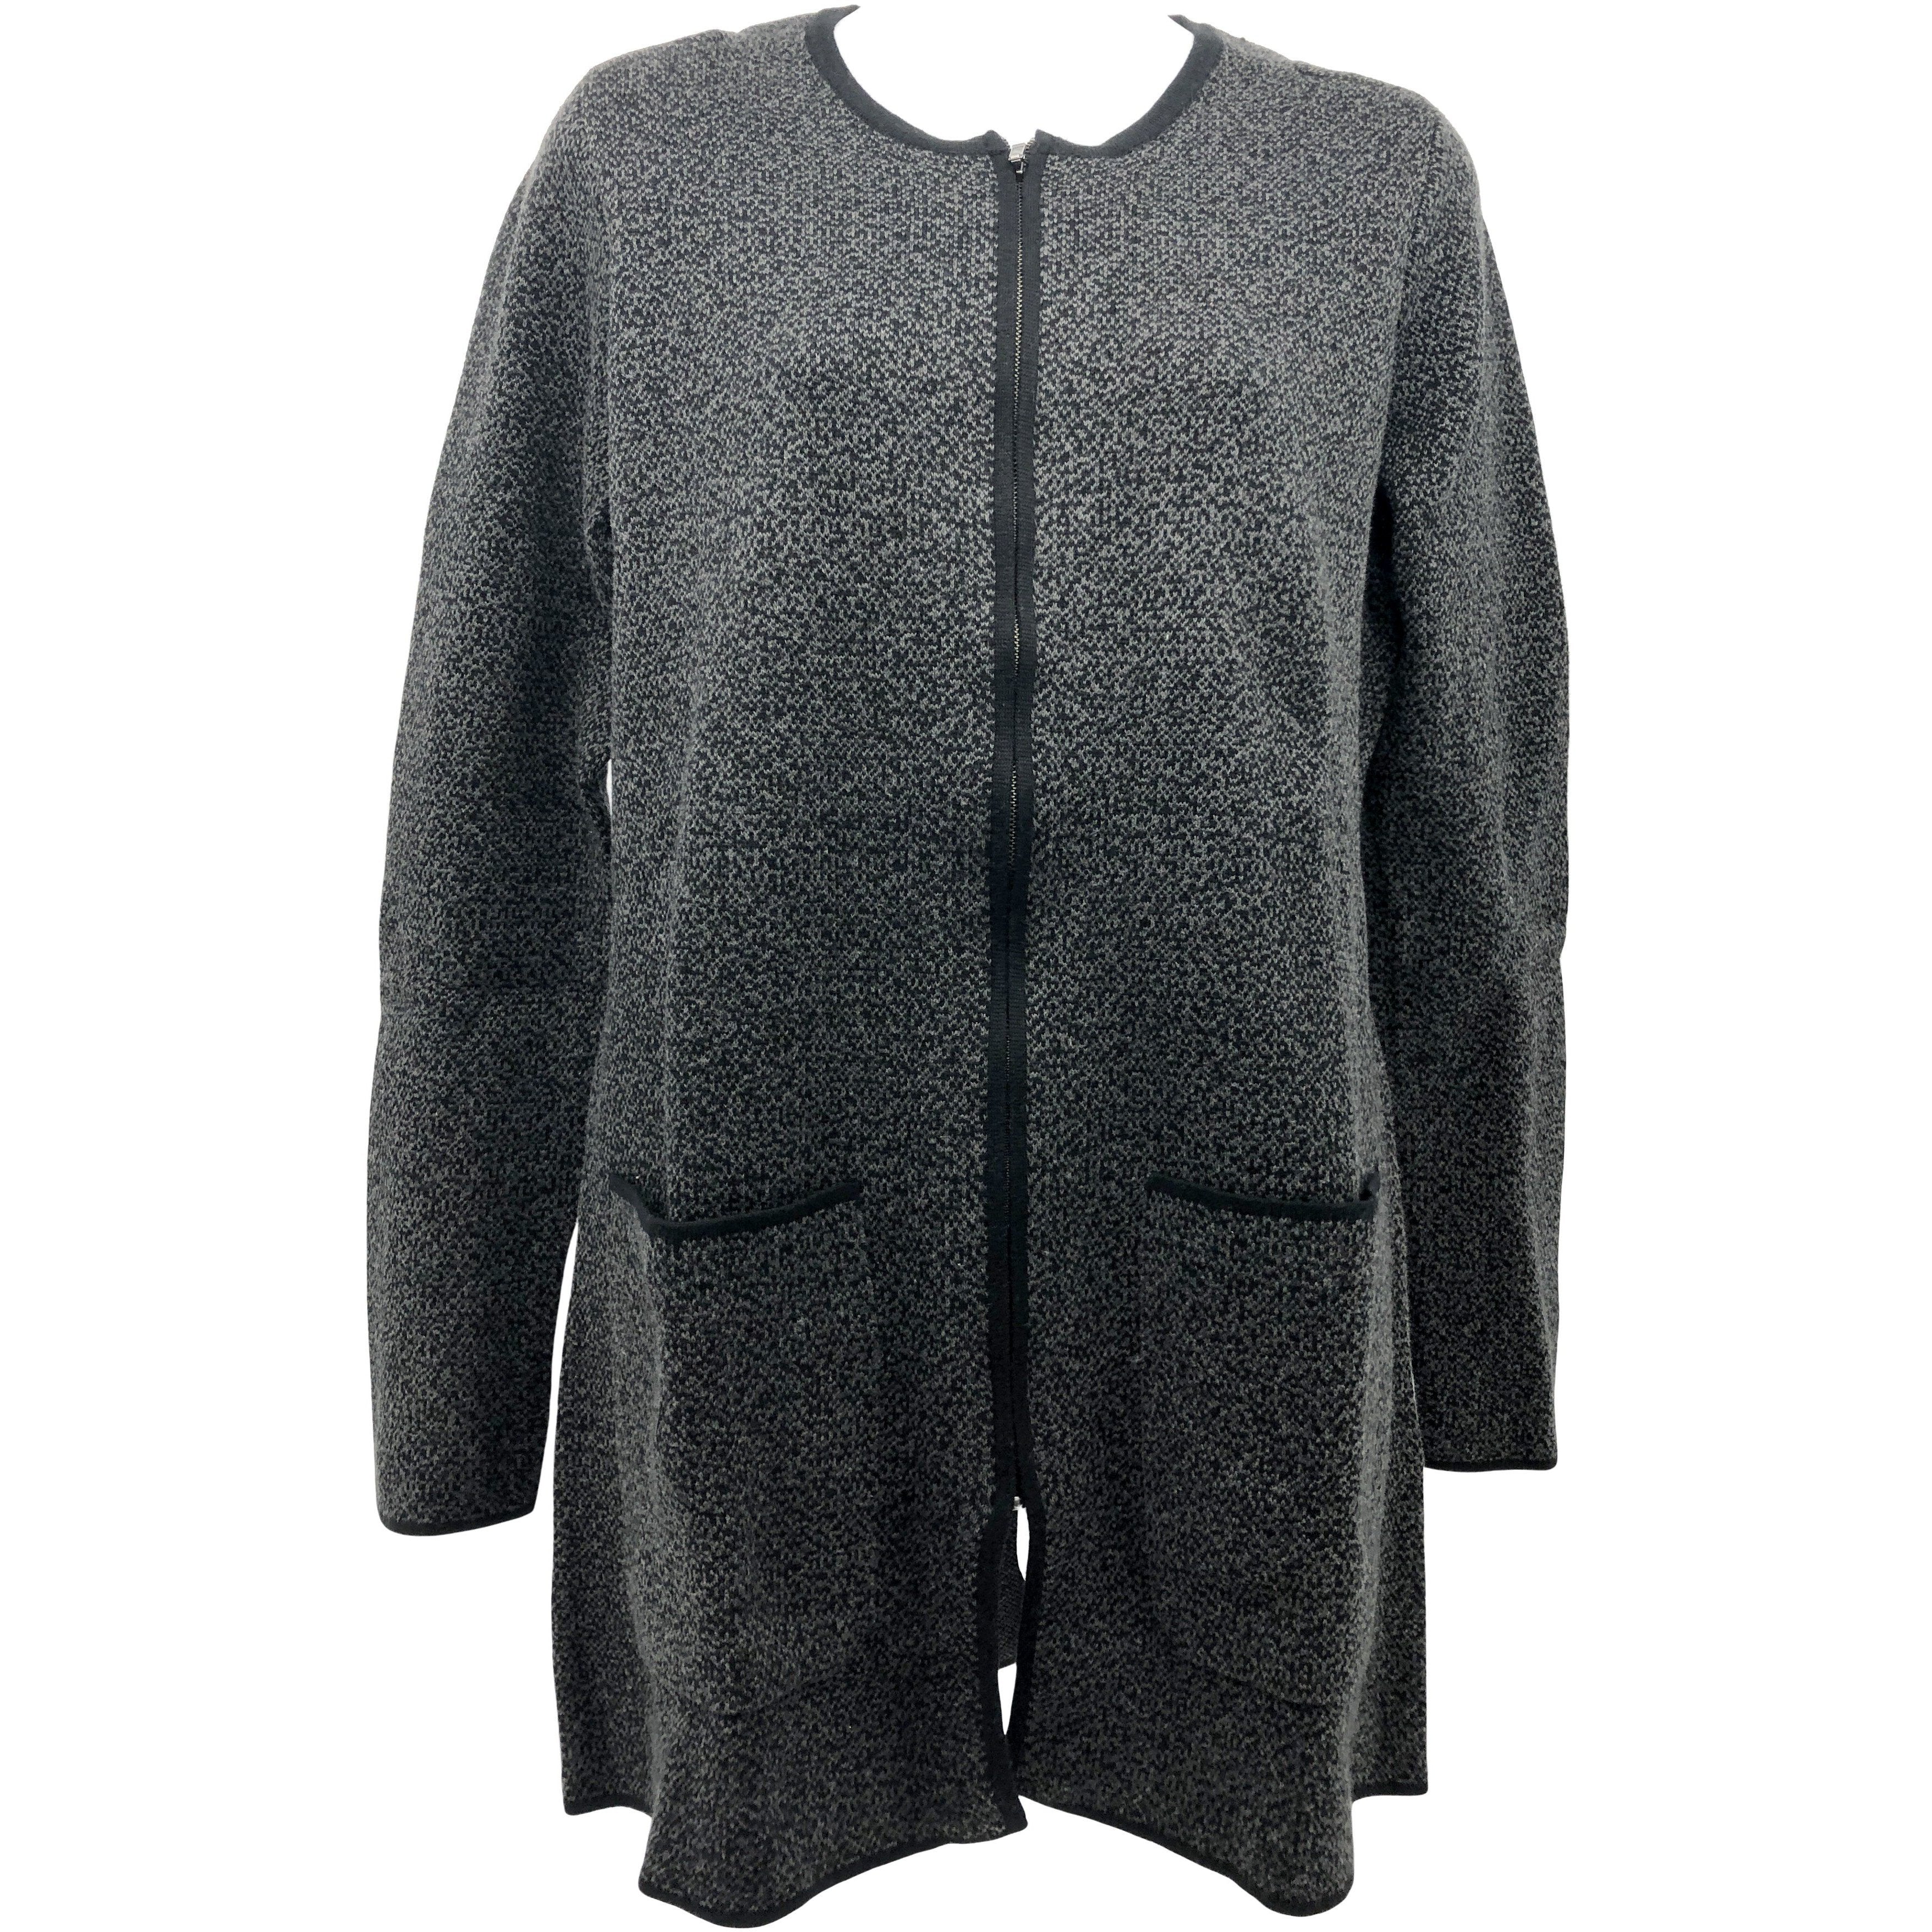 Nicole Miller Women's Sweater / Long Zip Up Sweater / Grey / Medium **NO TAGS**